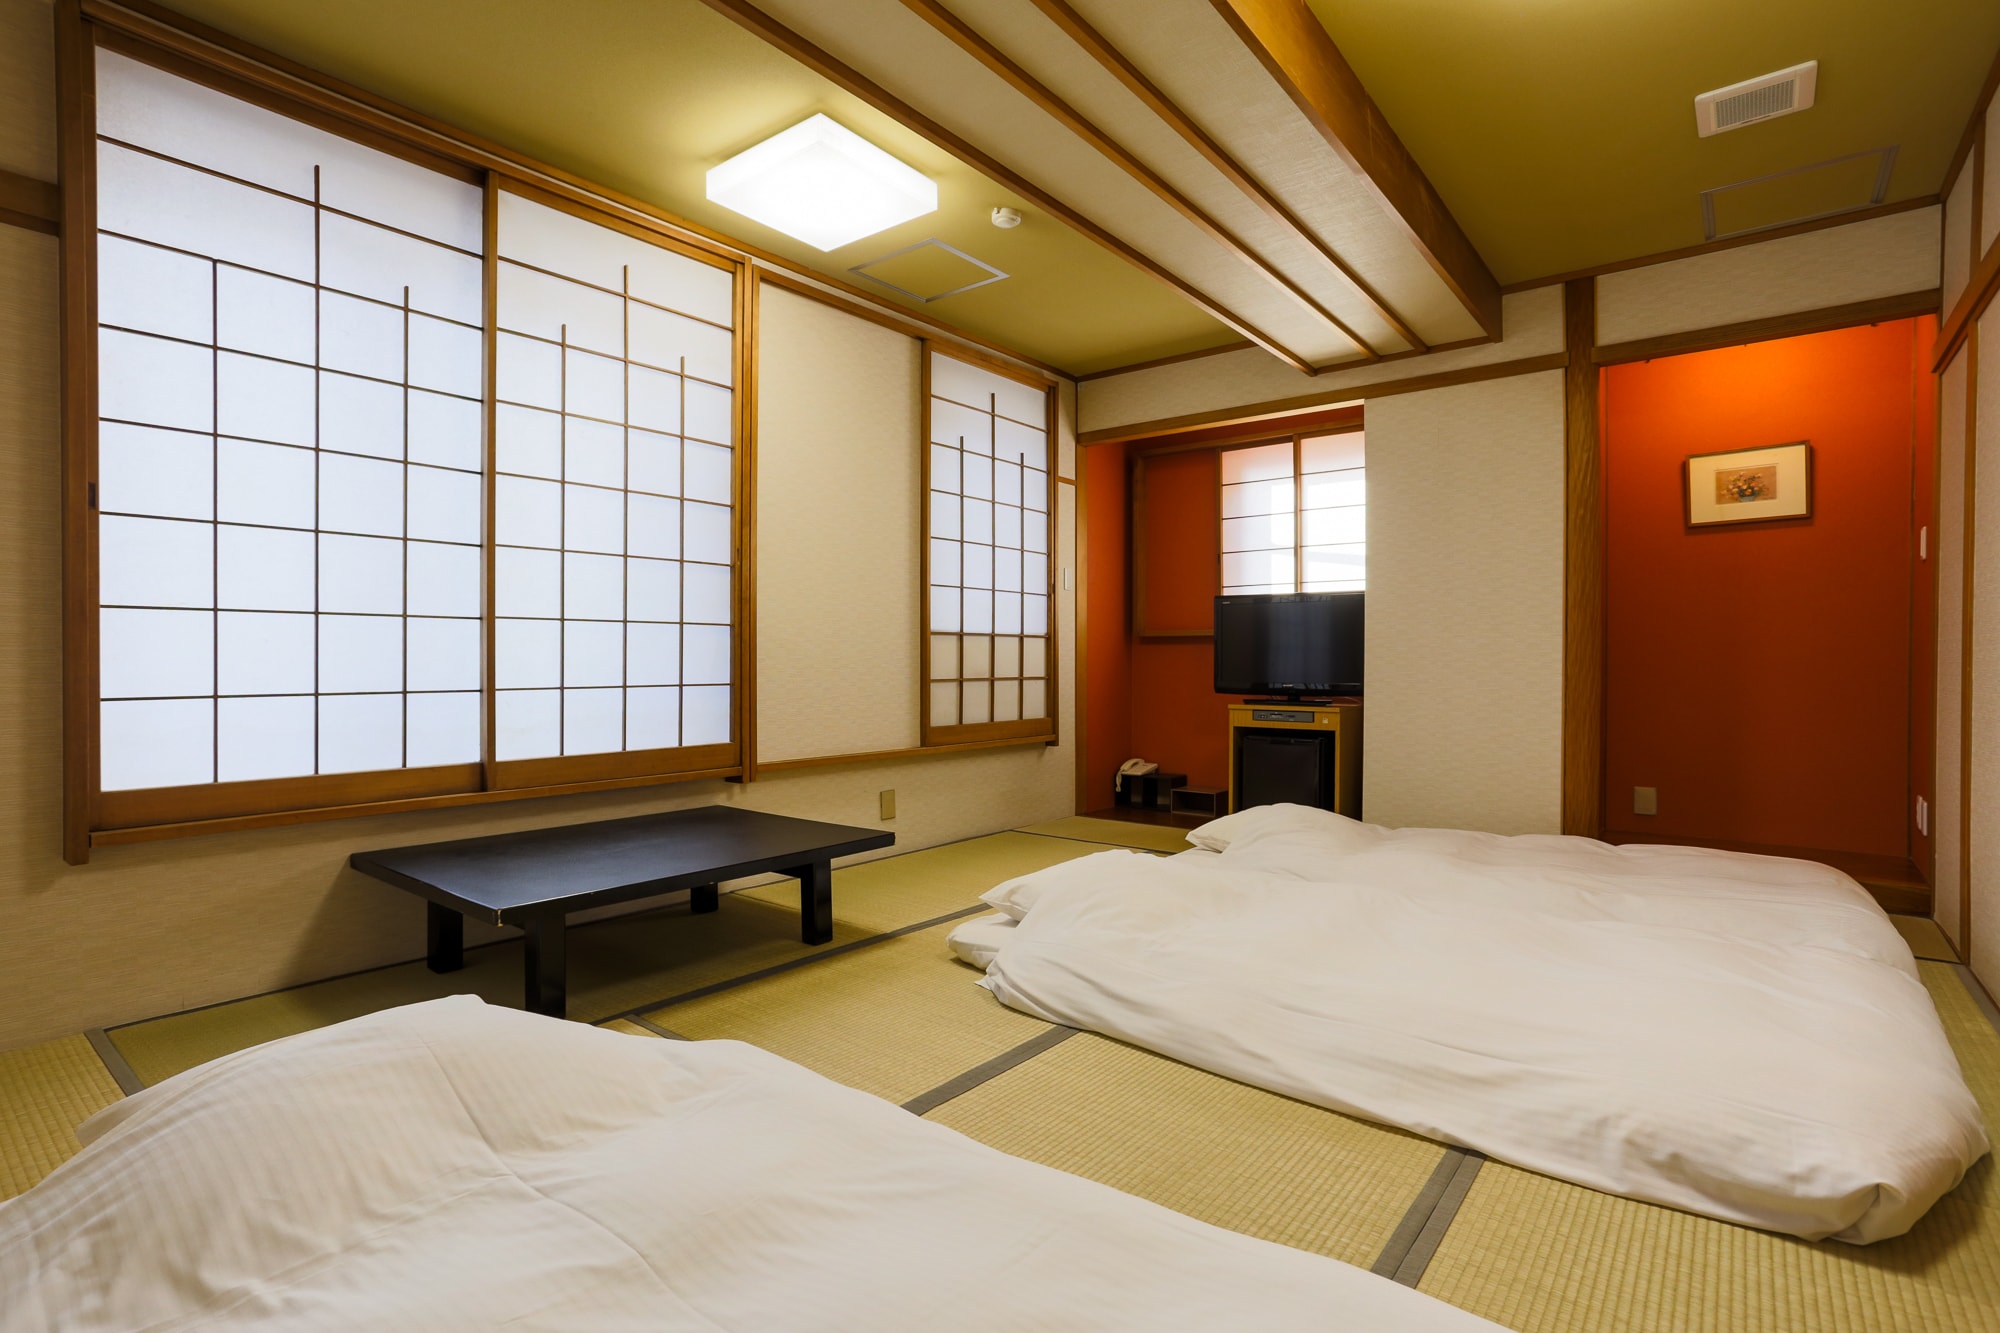 Japanese-style room 12 tatami mats